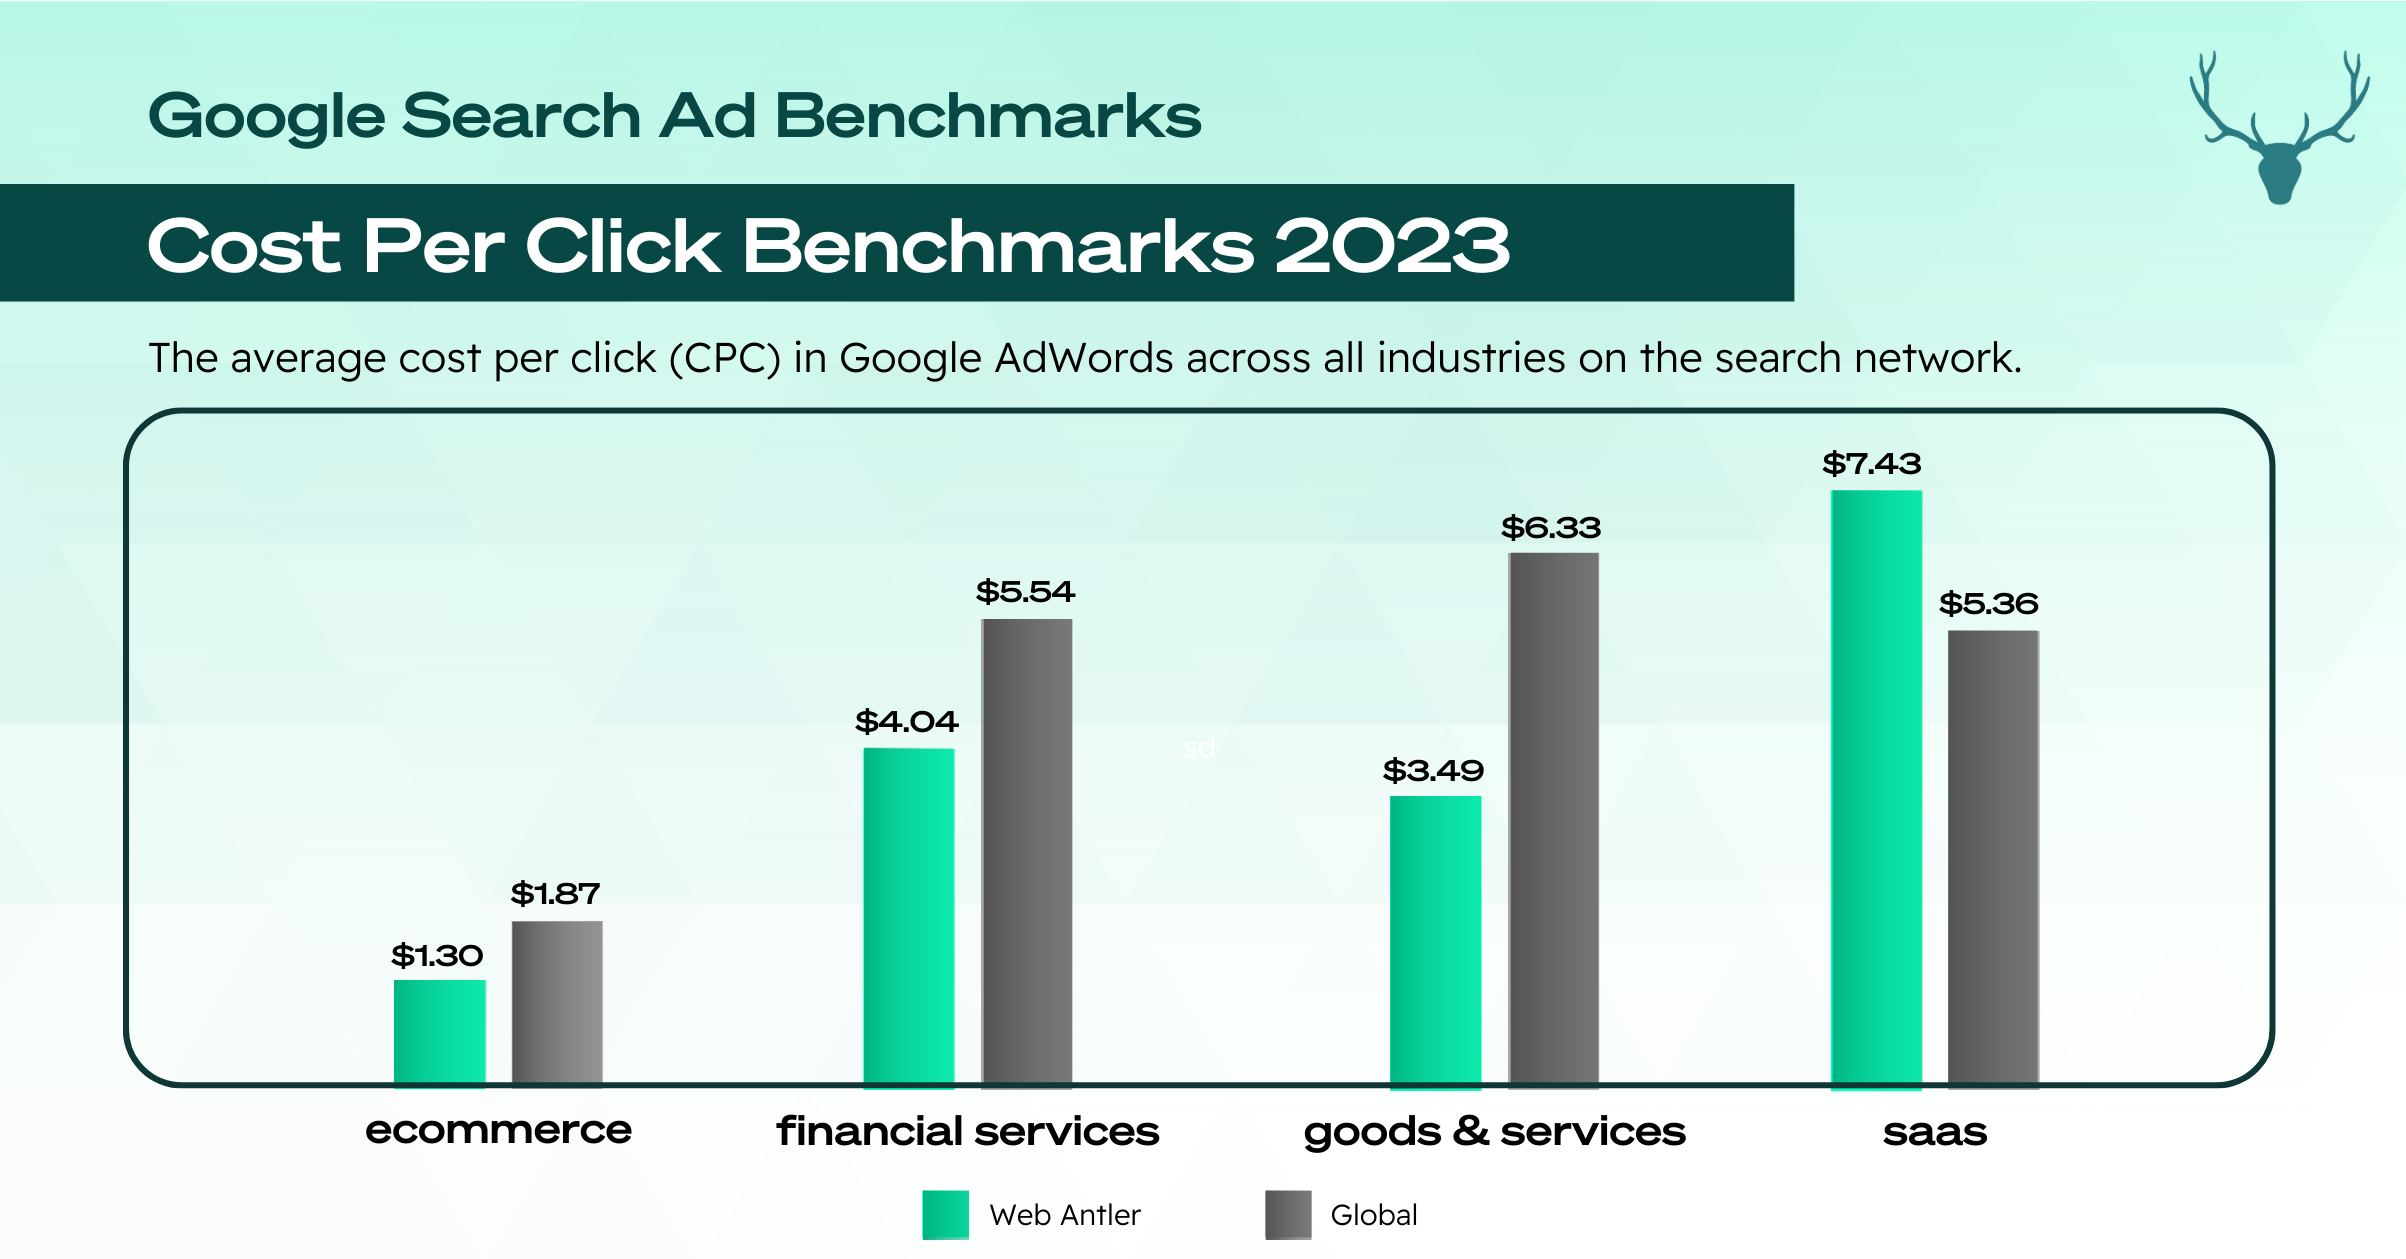 Google Search Ad Benchmarks Cost Per Click 2023 NZ